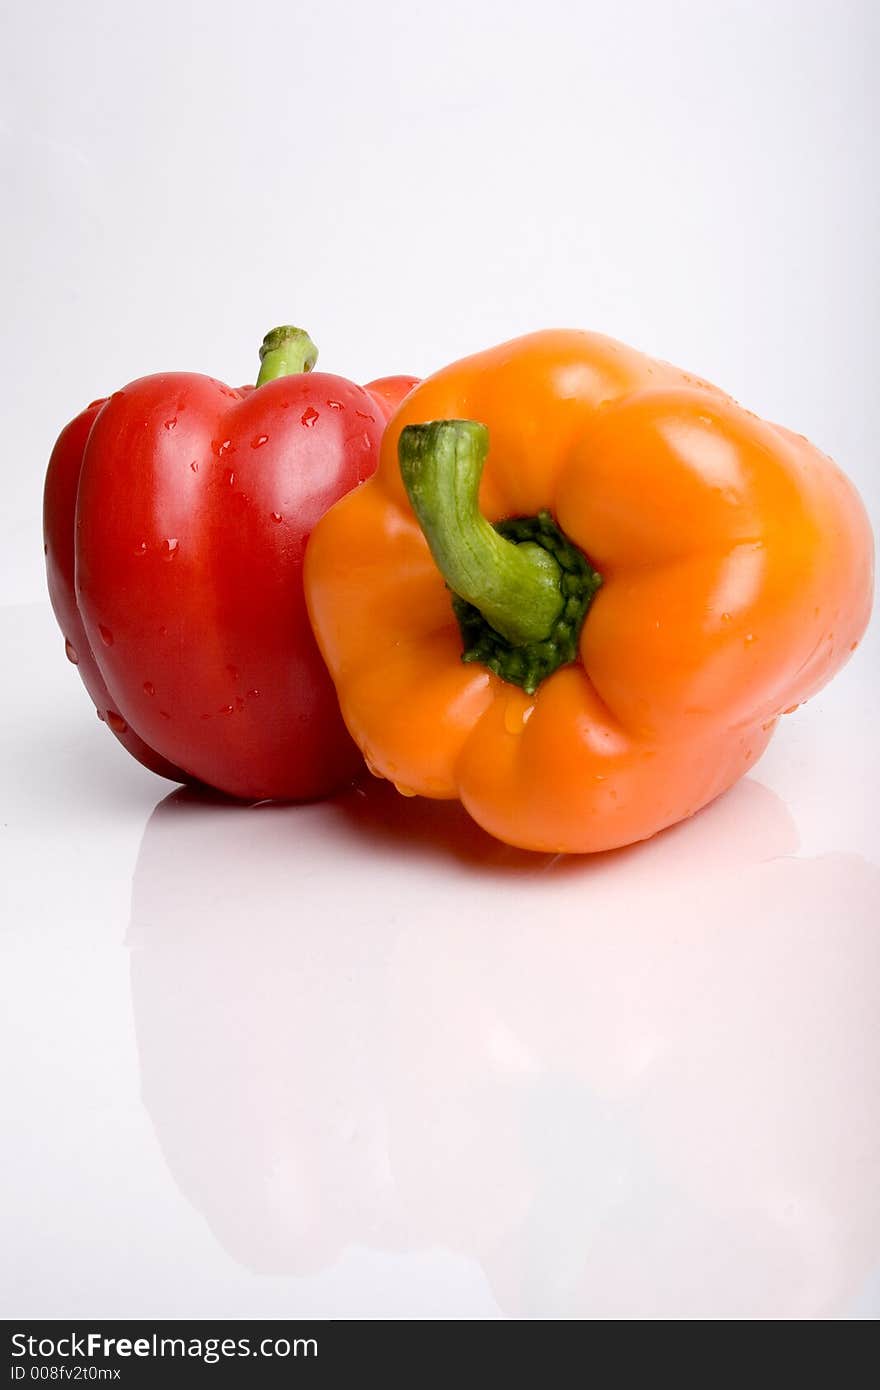 Red and orange pepper together. Red and orange pepper together